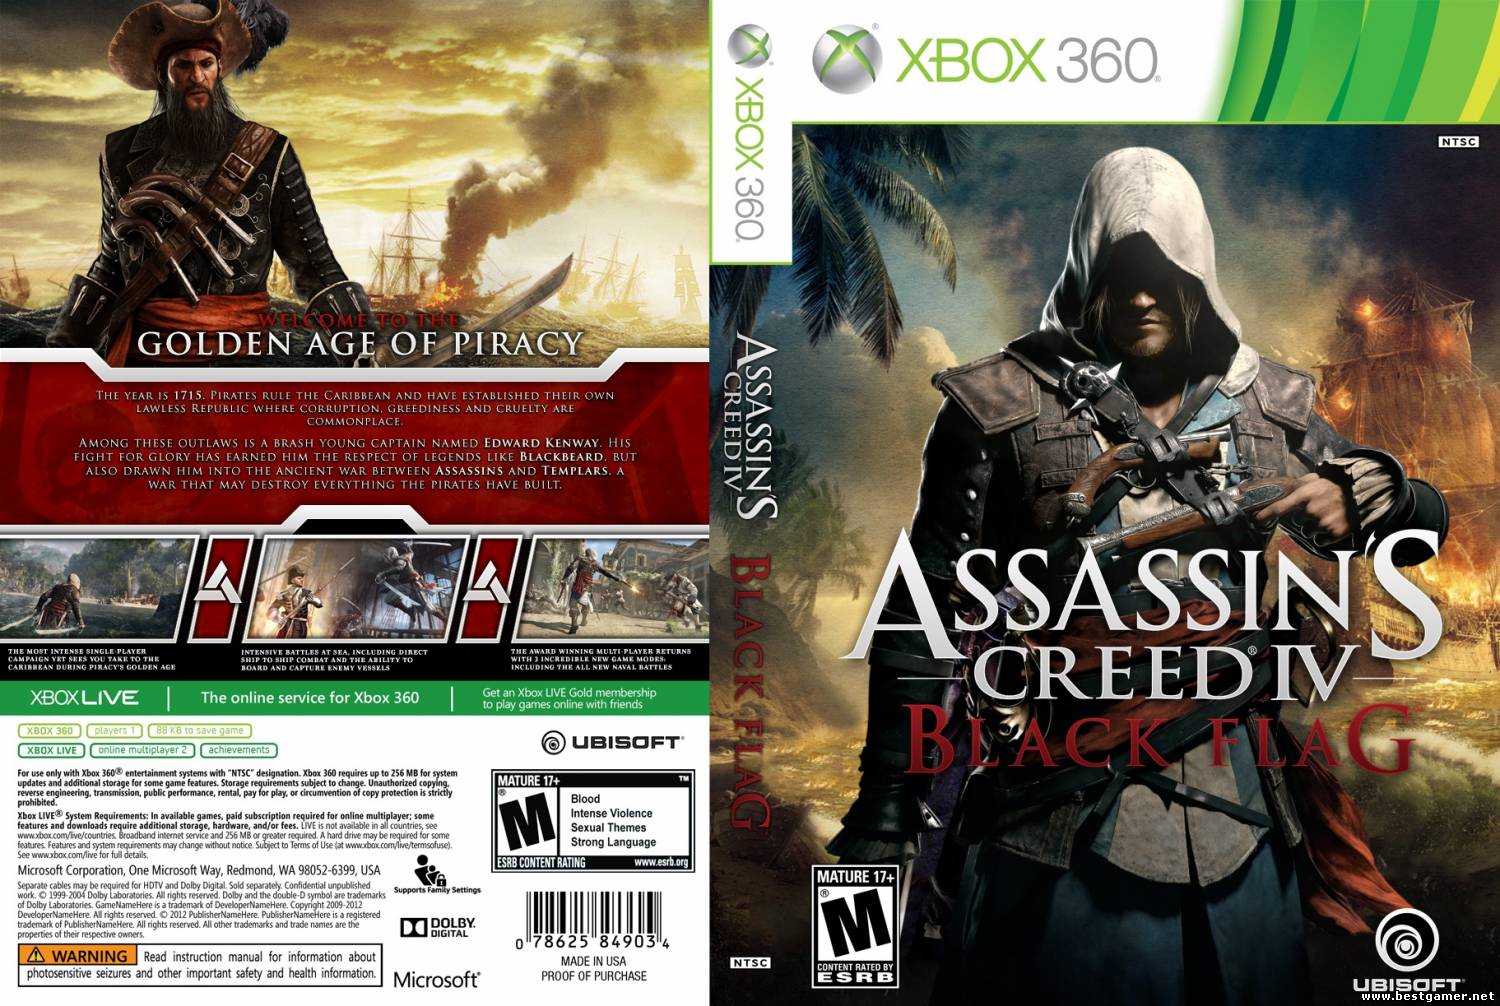 Формат игр xbox 360. Обложки игр для Xbox 360. Ассасин Крид 4 обложка хбокс 360. Assassins Creed Black Flag Xbox 360 обложка. Обложки игр ассасин Крид 4 хбокс 360.